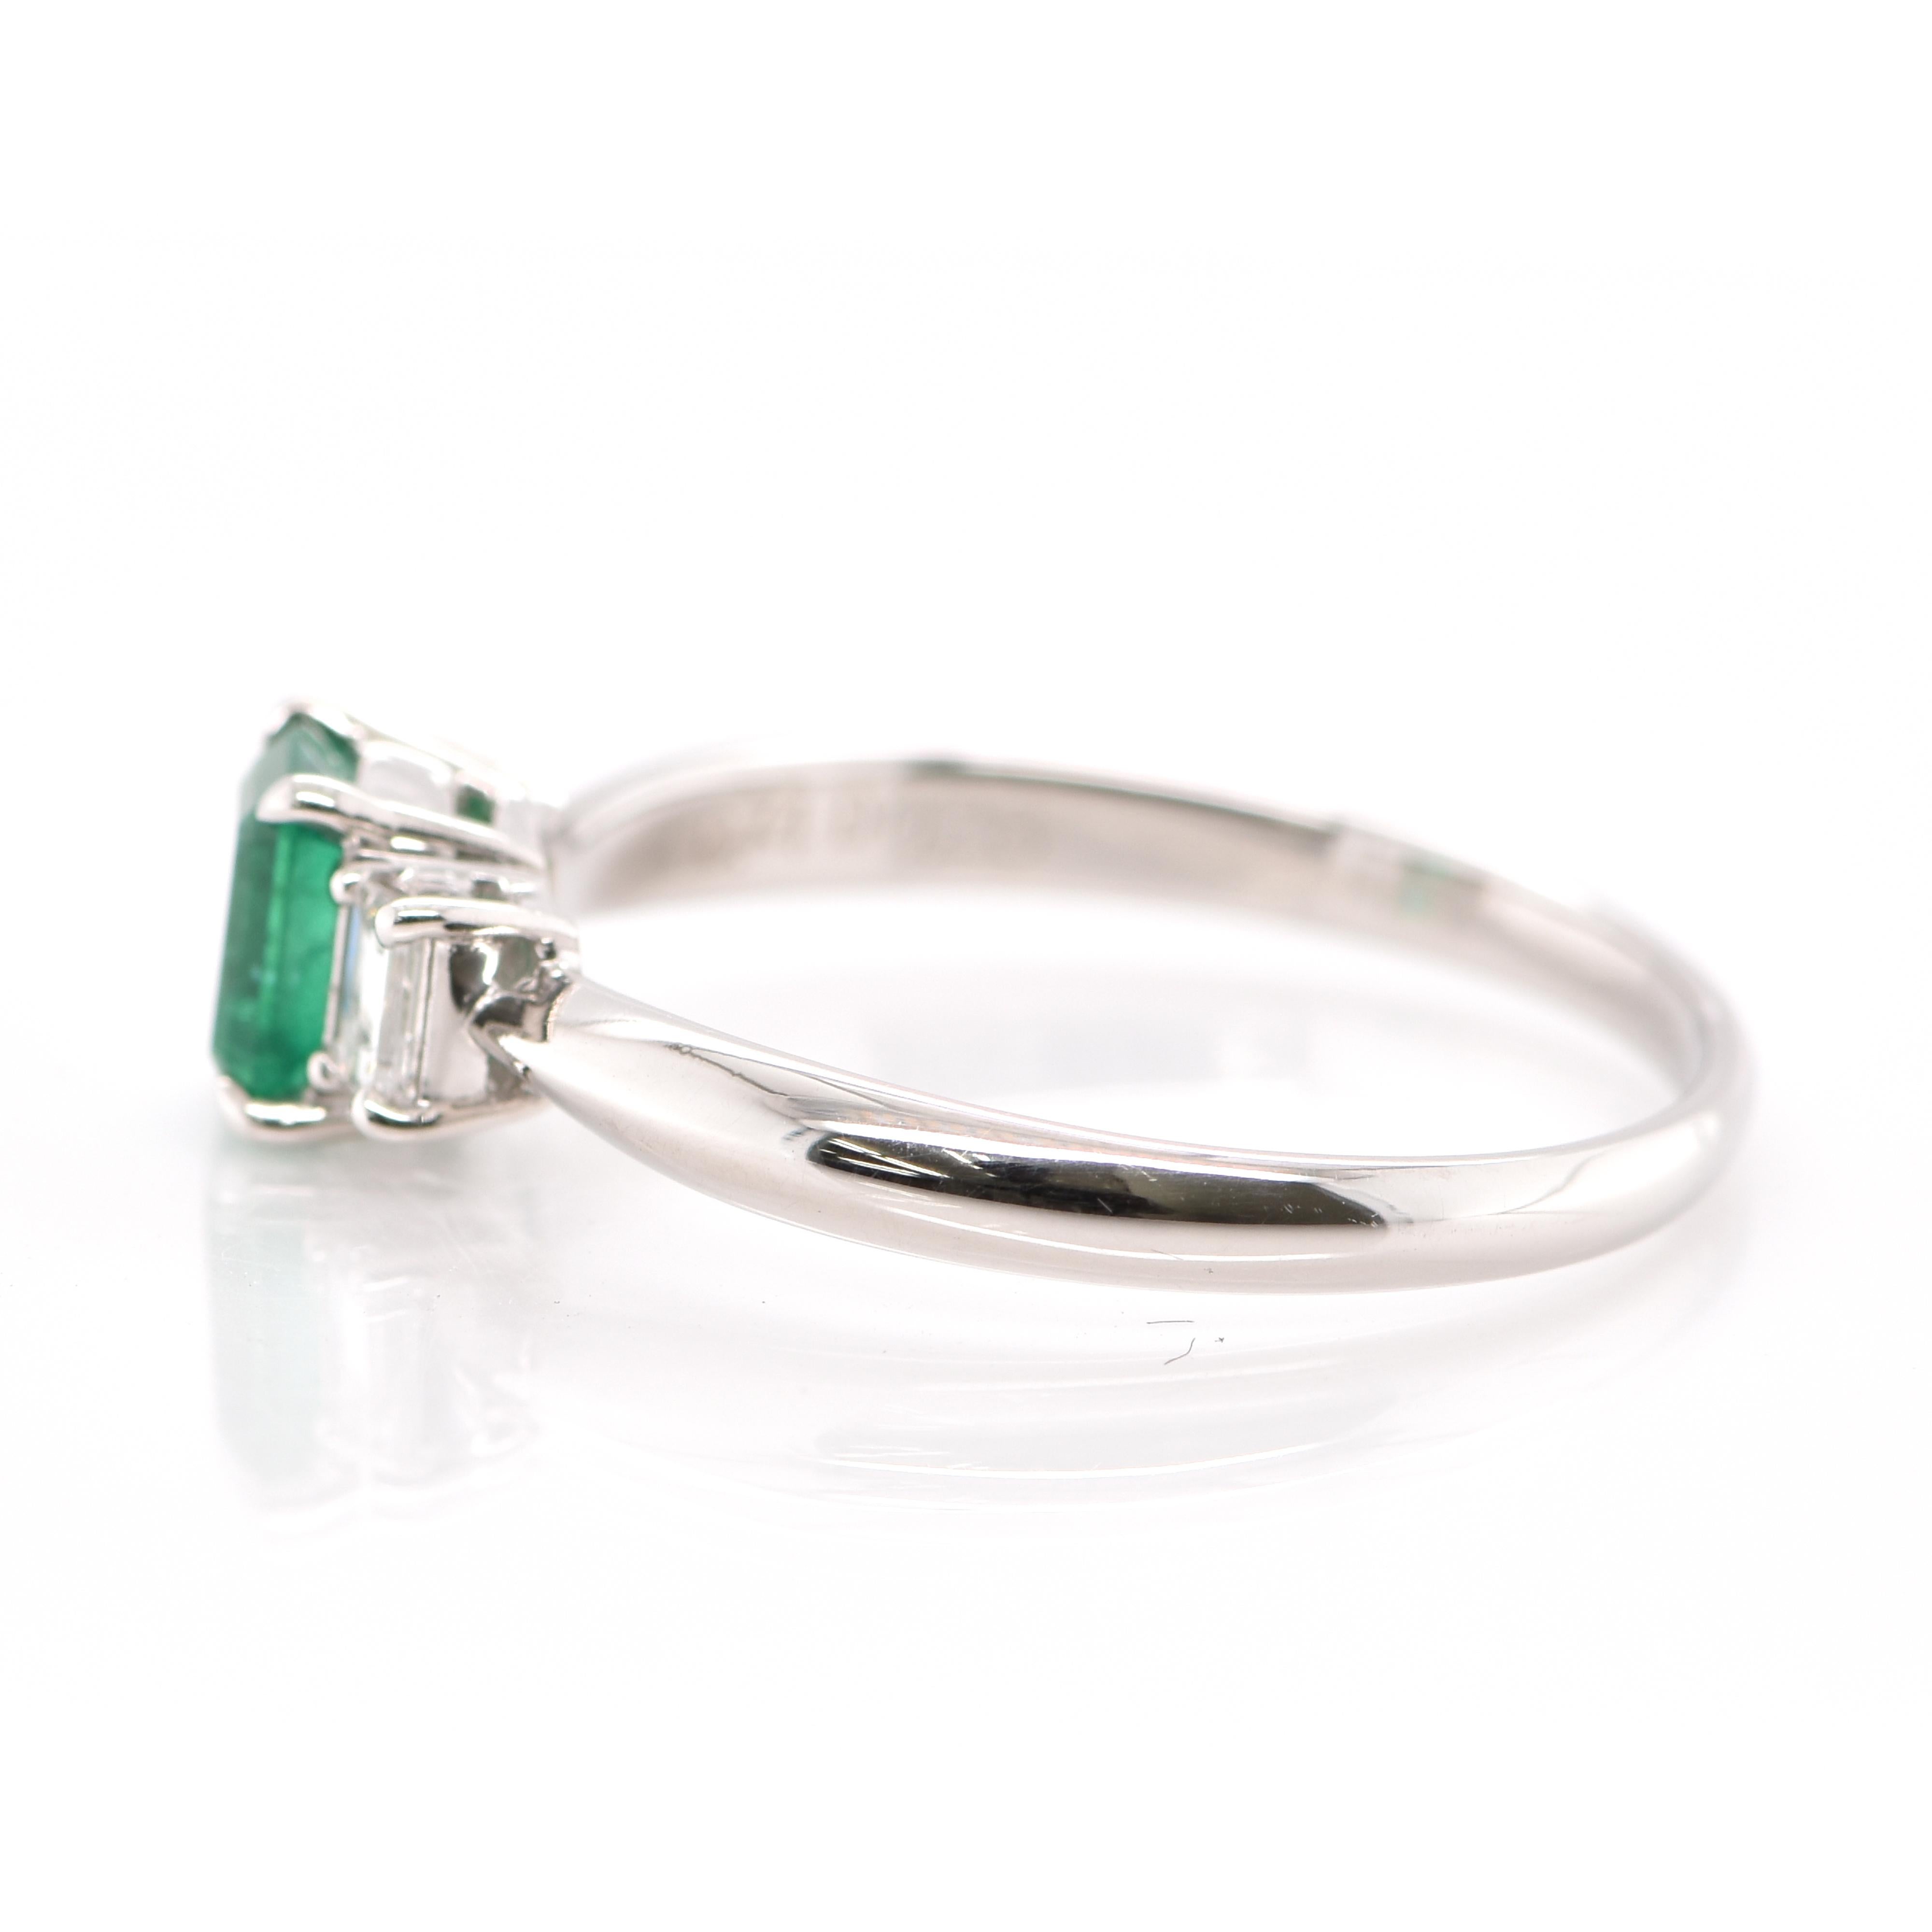 Emerald Cut 0.74 Carat Natural Emerald and Diamond Engagement Ring Set in Platinum